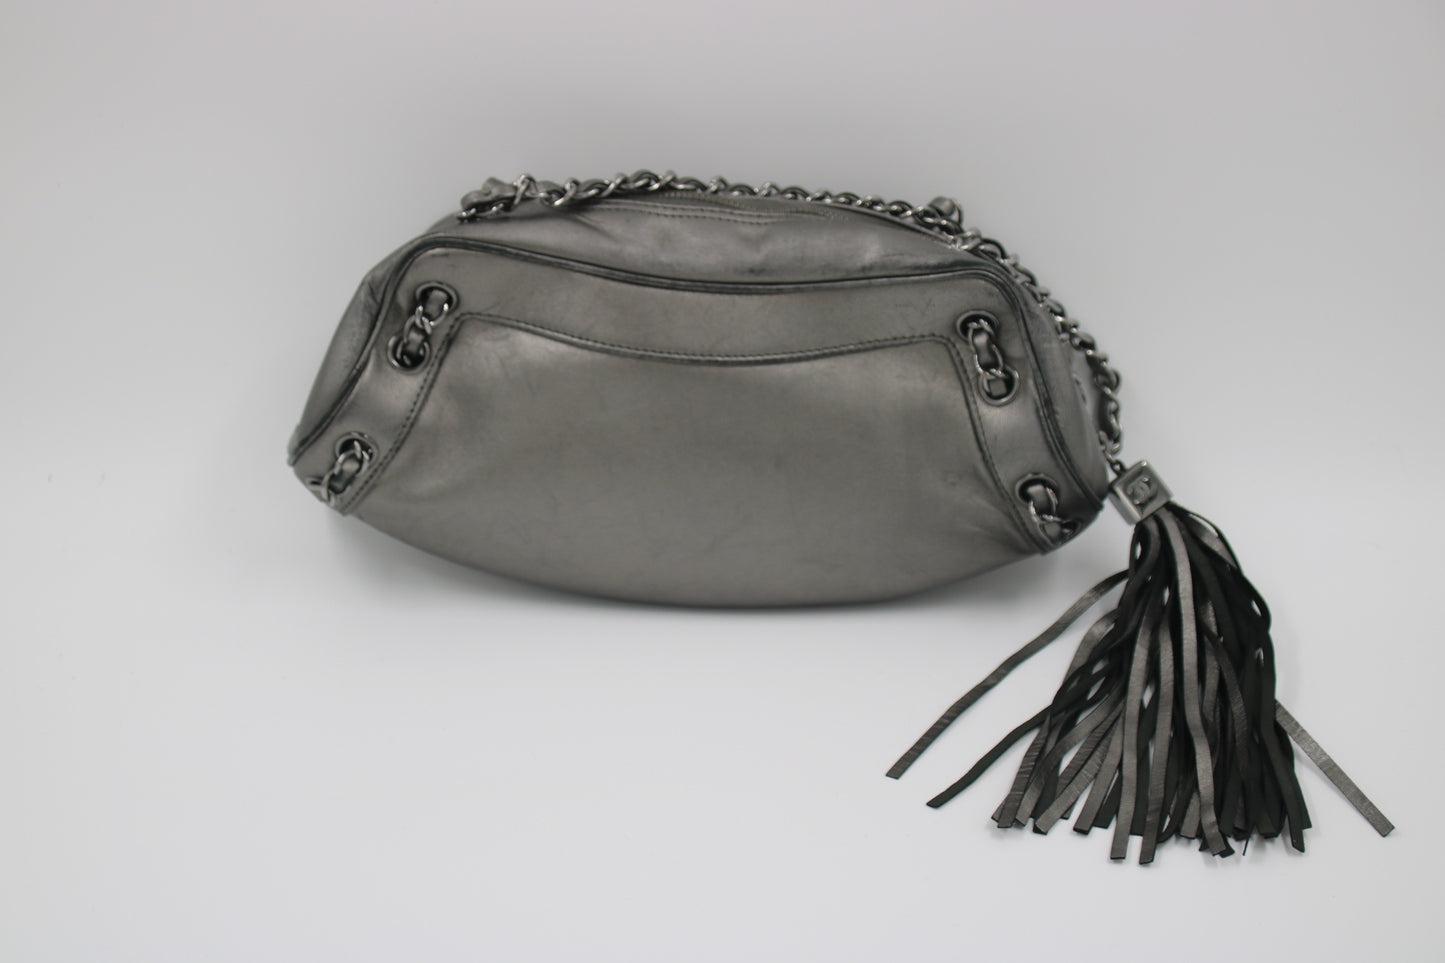 CHANEL Metallic Grey Leather Tassel Evening Bag